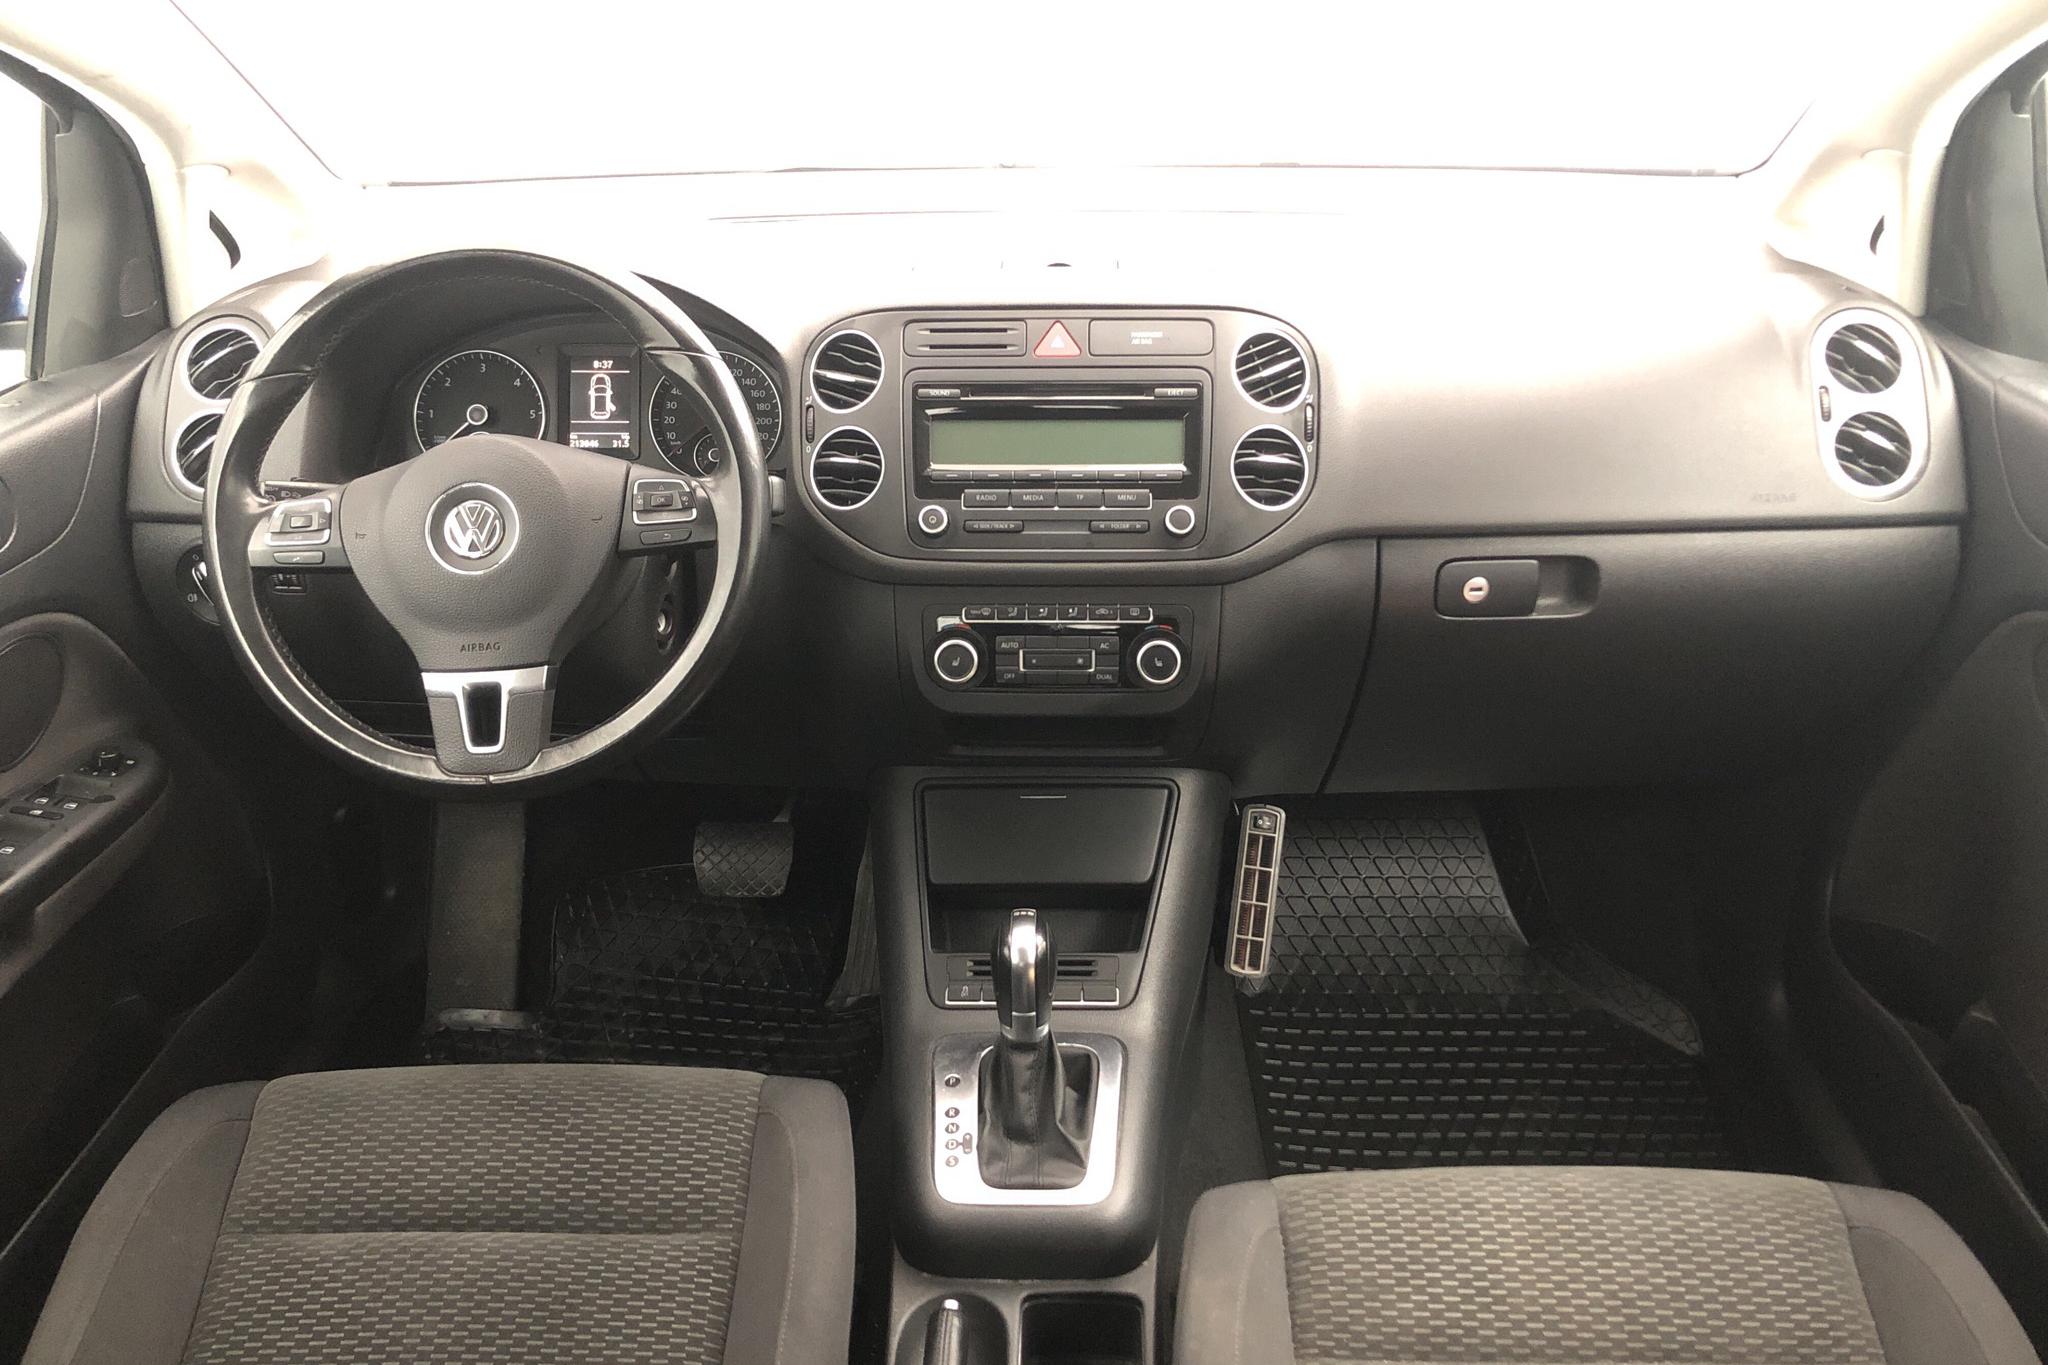 VW Golf VI 1.6 TDI BlueMotion Technology Plus (105hk) - 213 040 km - Automatic - Dark Blue - 2011